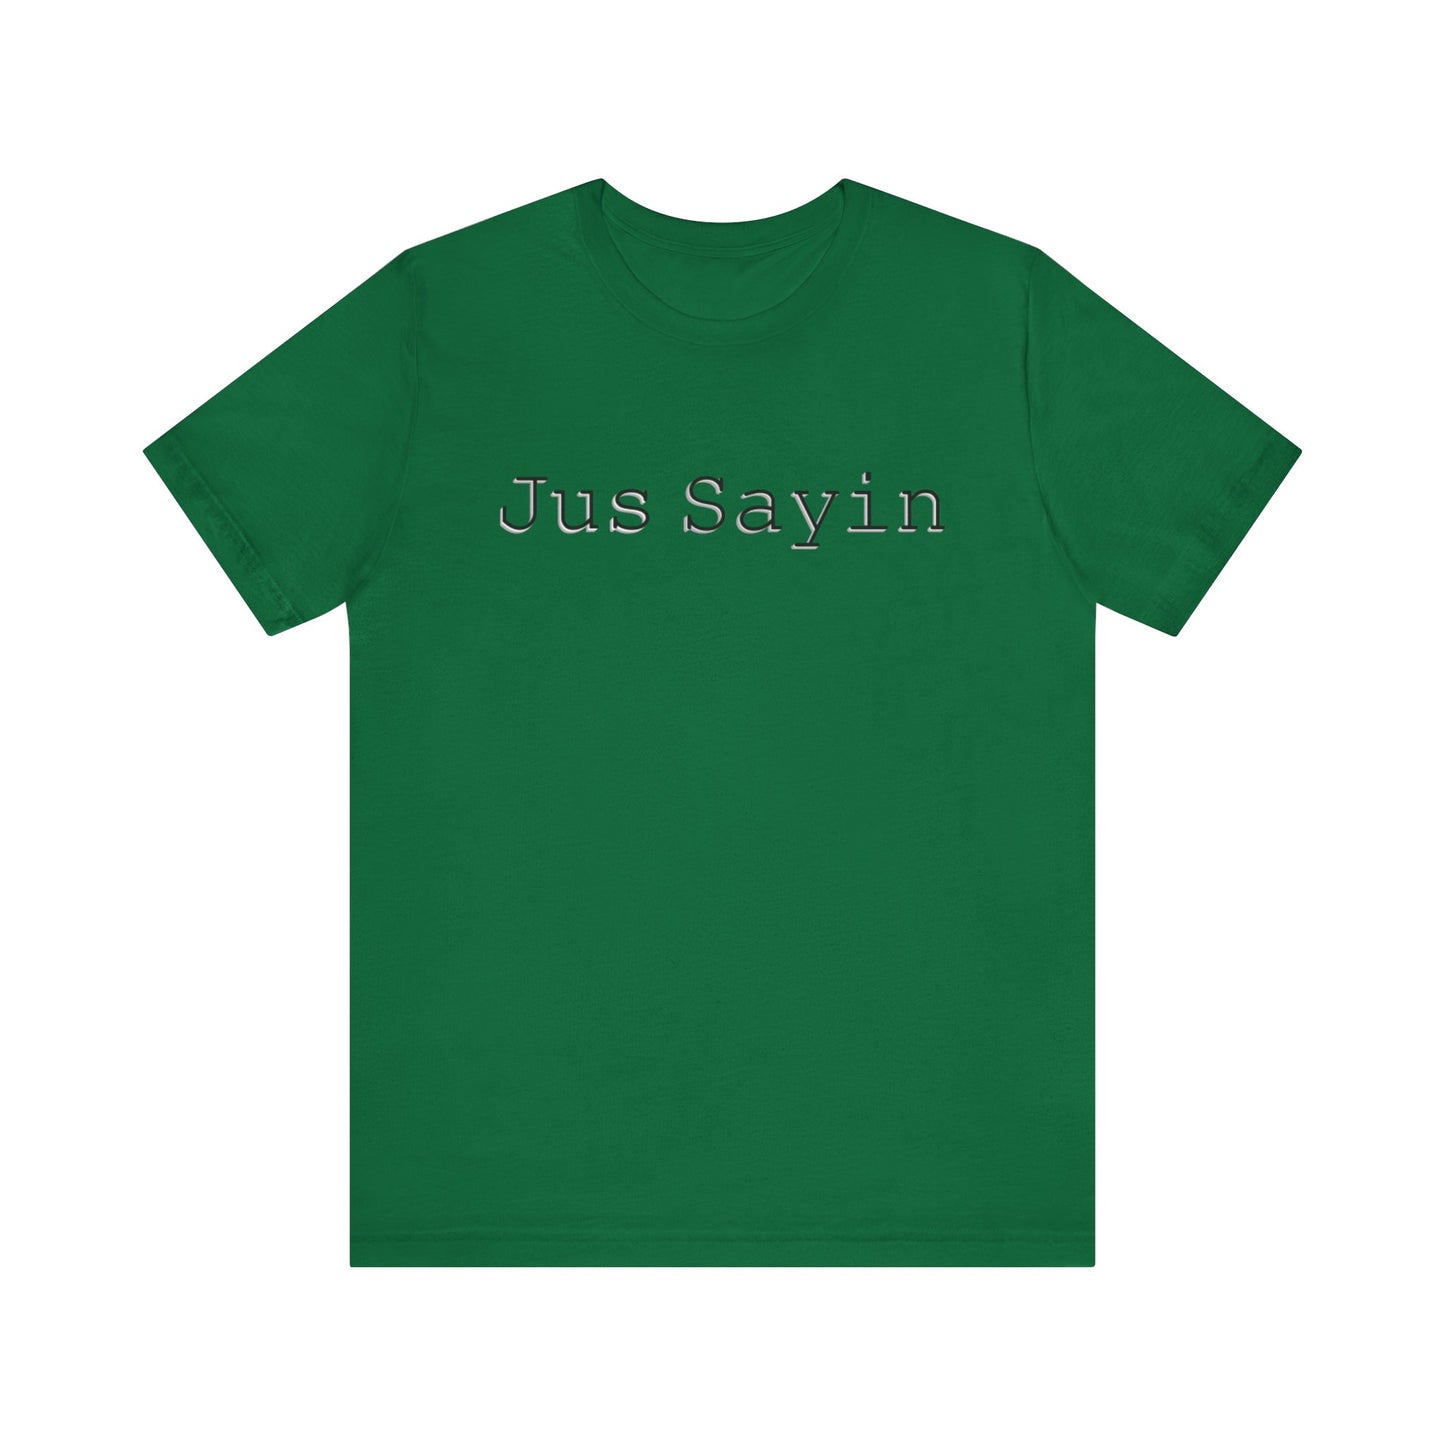 Jus Sayin - Hurts Shirts Collection